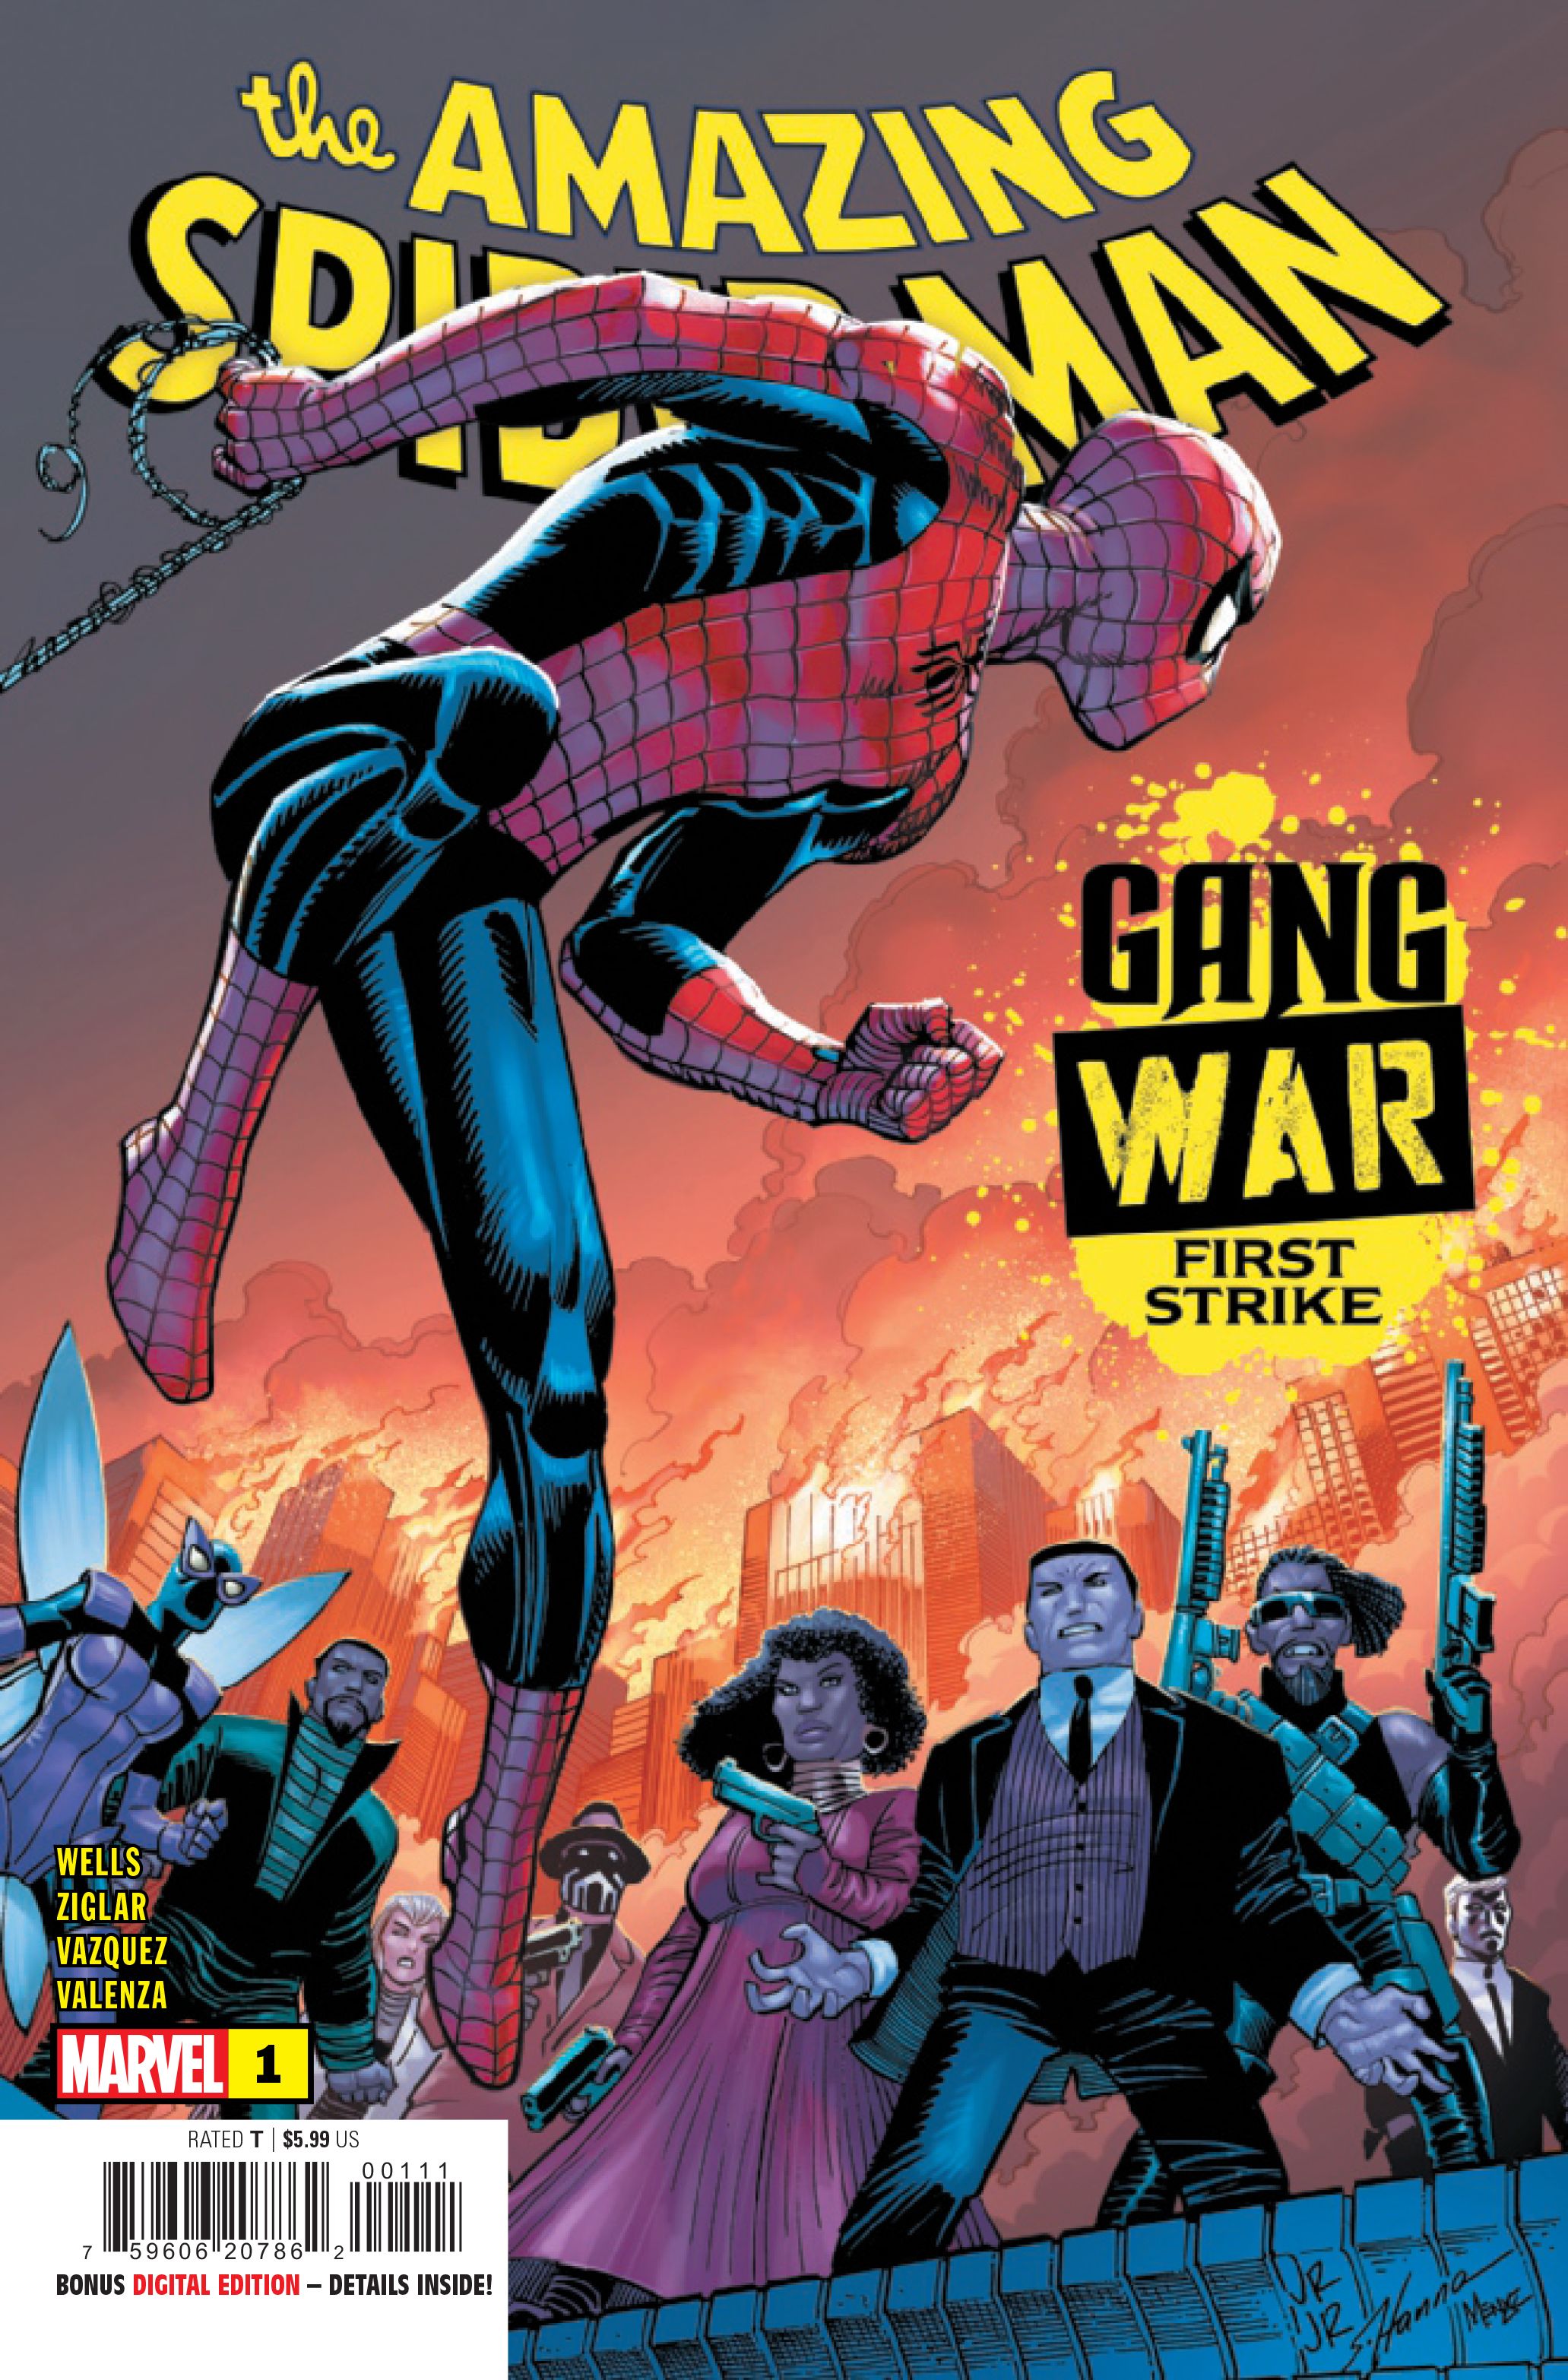 Amazing Spider-Man Gang War First Strike 1 cover